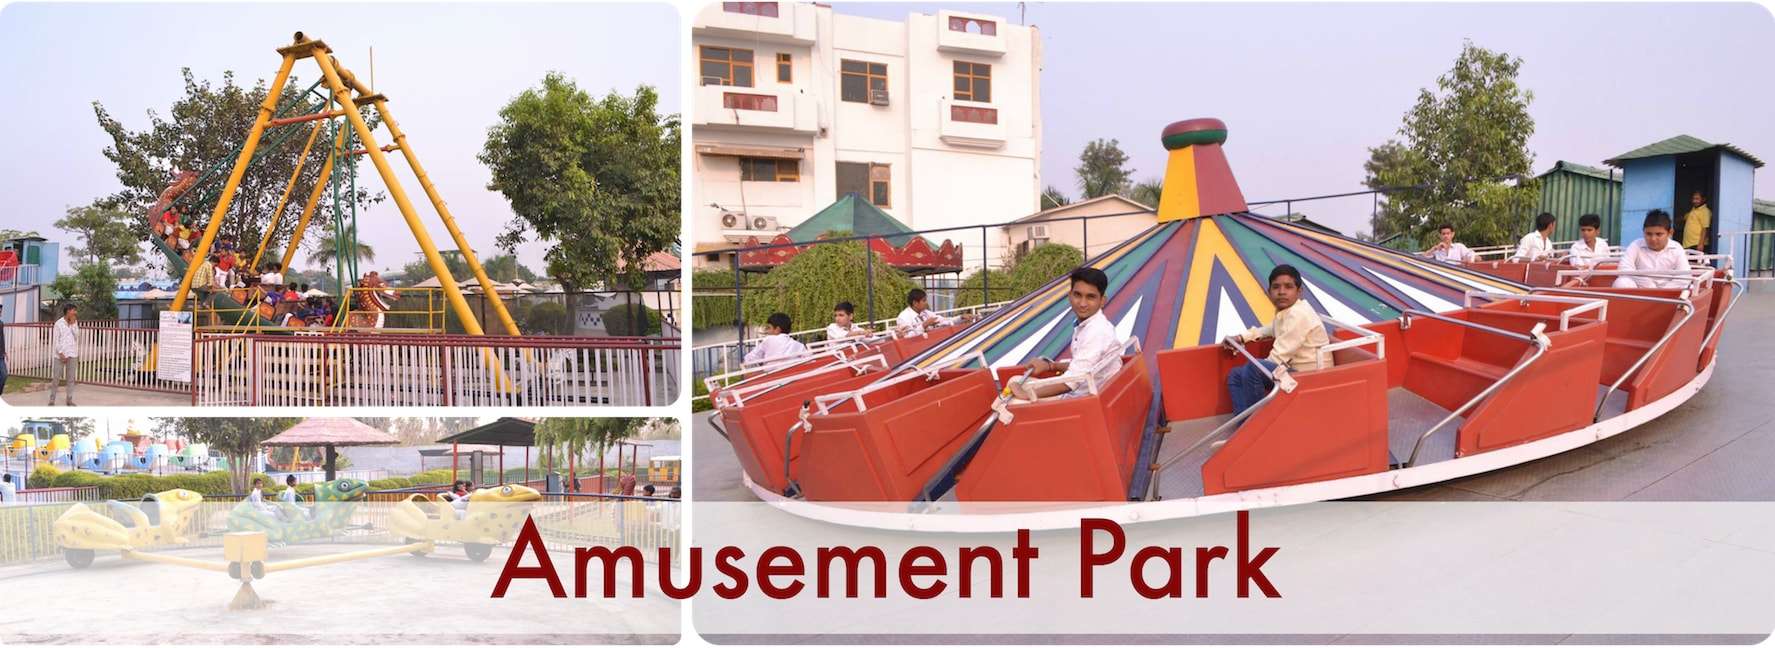 Amusement park.jpg